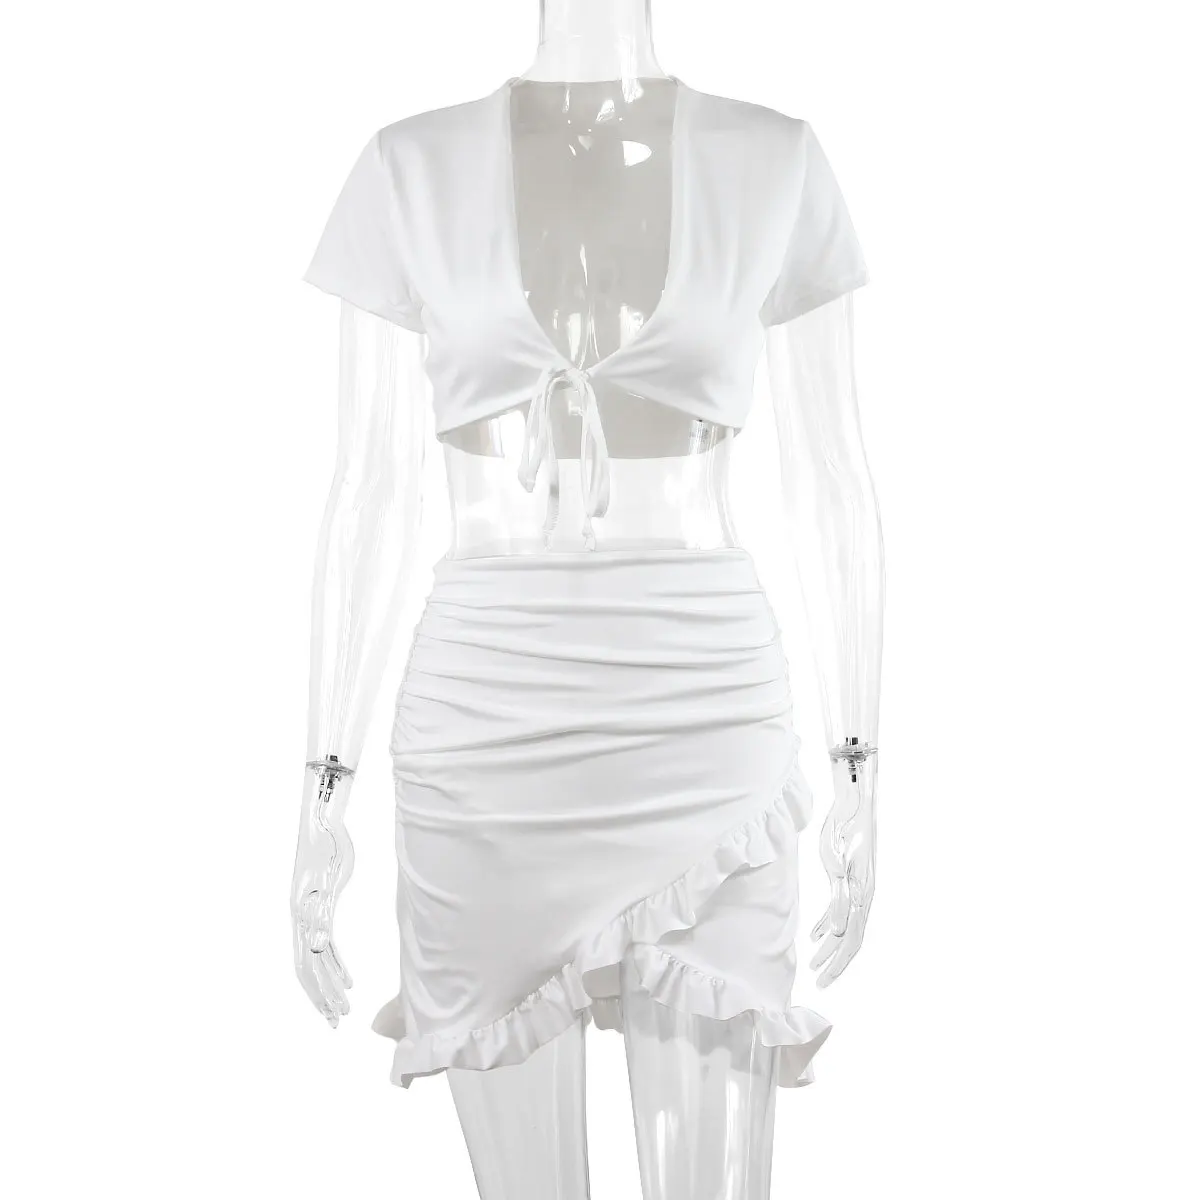 KOLLSEEY Brand  Asymmetrical Fashion Casual Dresses Women Mini Dress Summer Elegant Women's Dresses enlarge